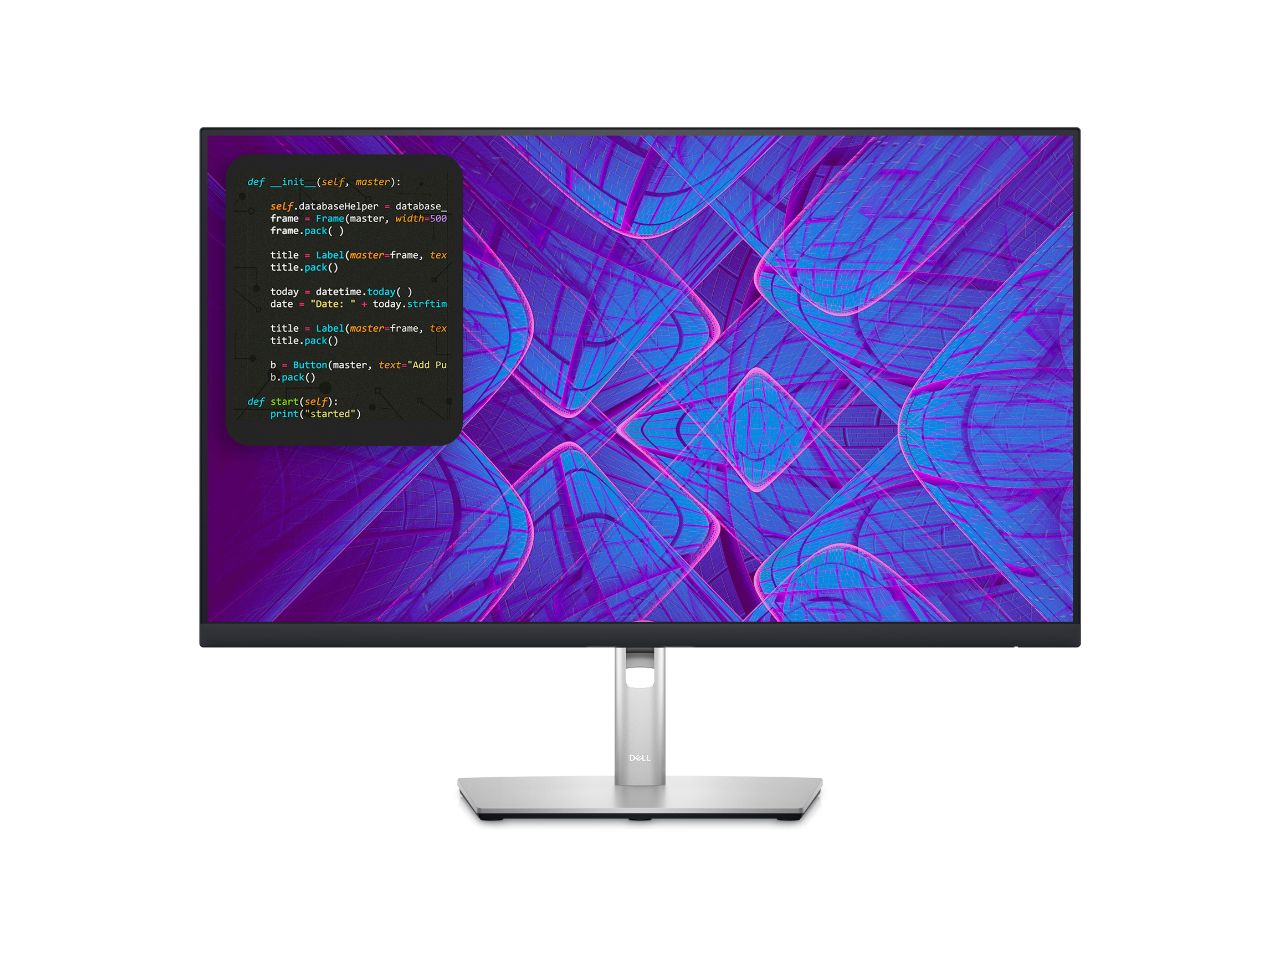 Dell 4K USB-C 27-inch monitor on white background.